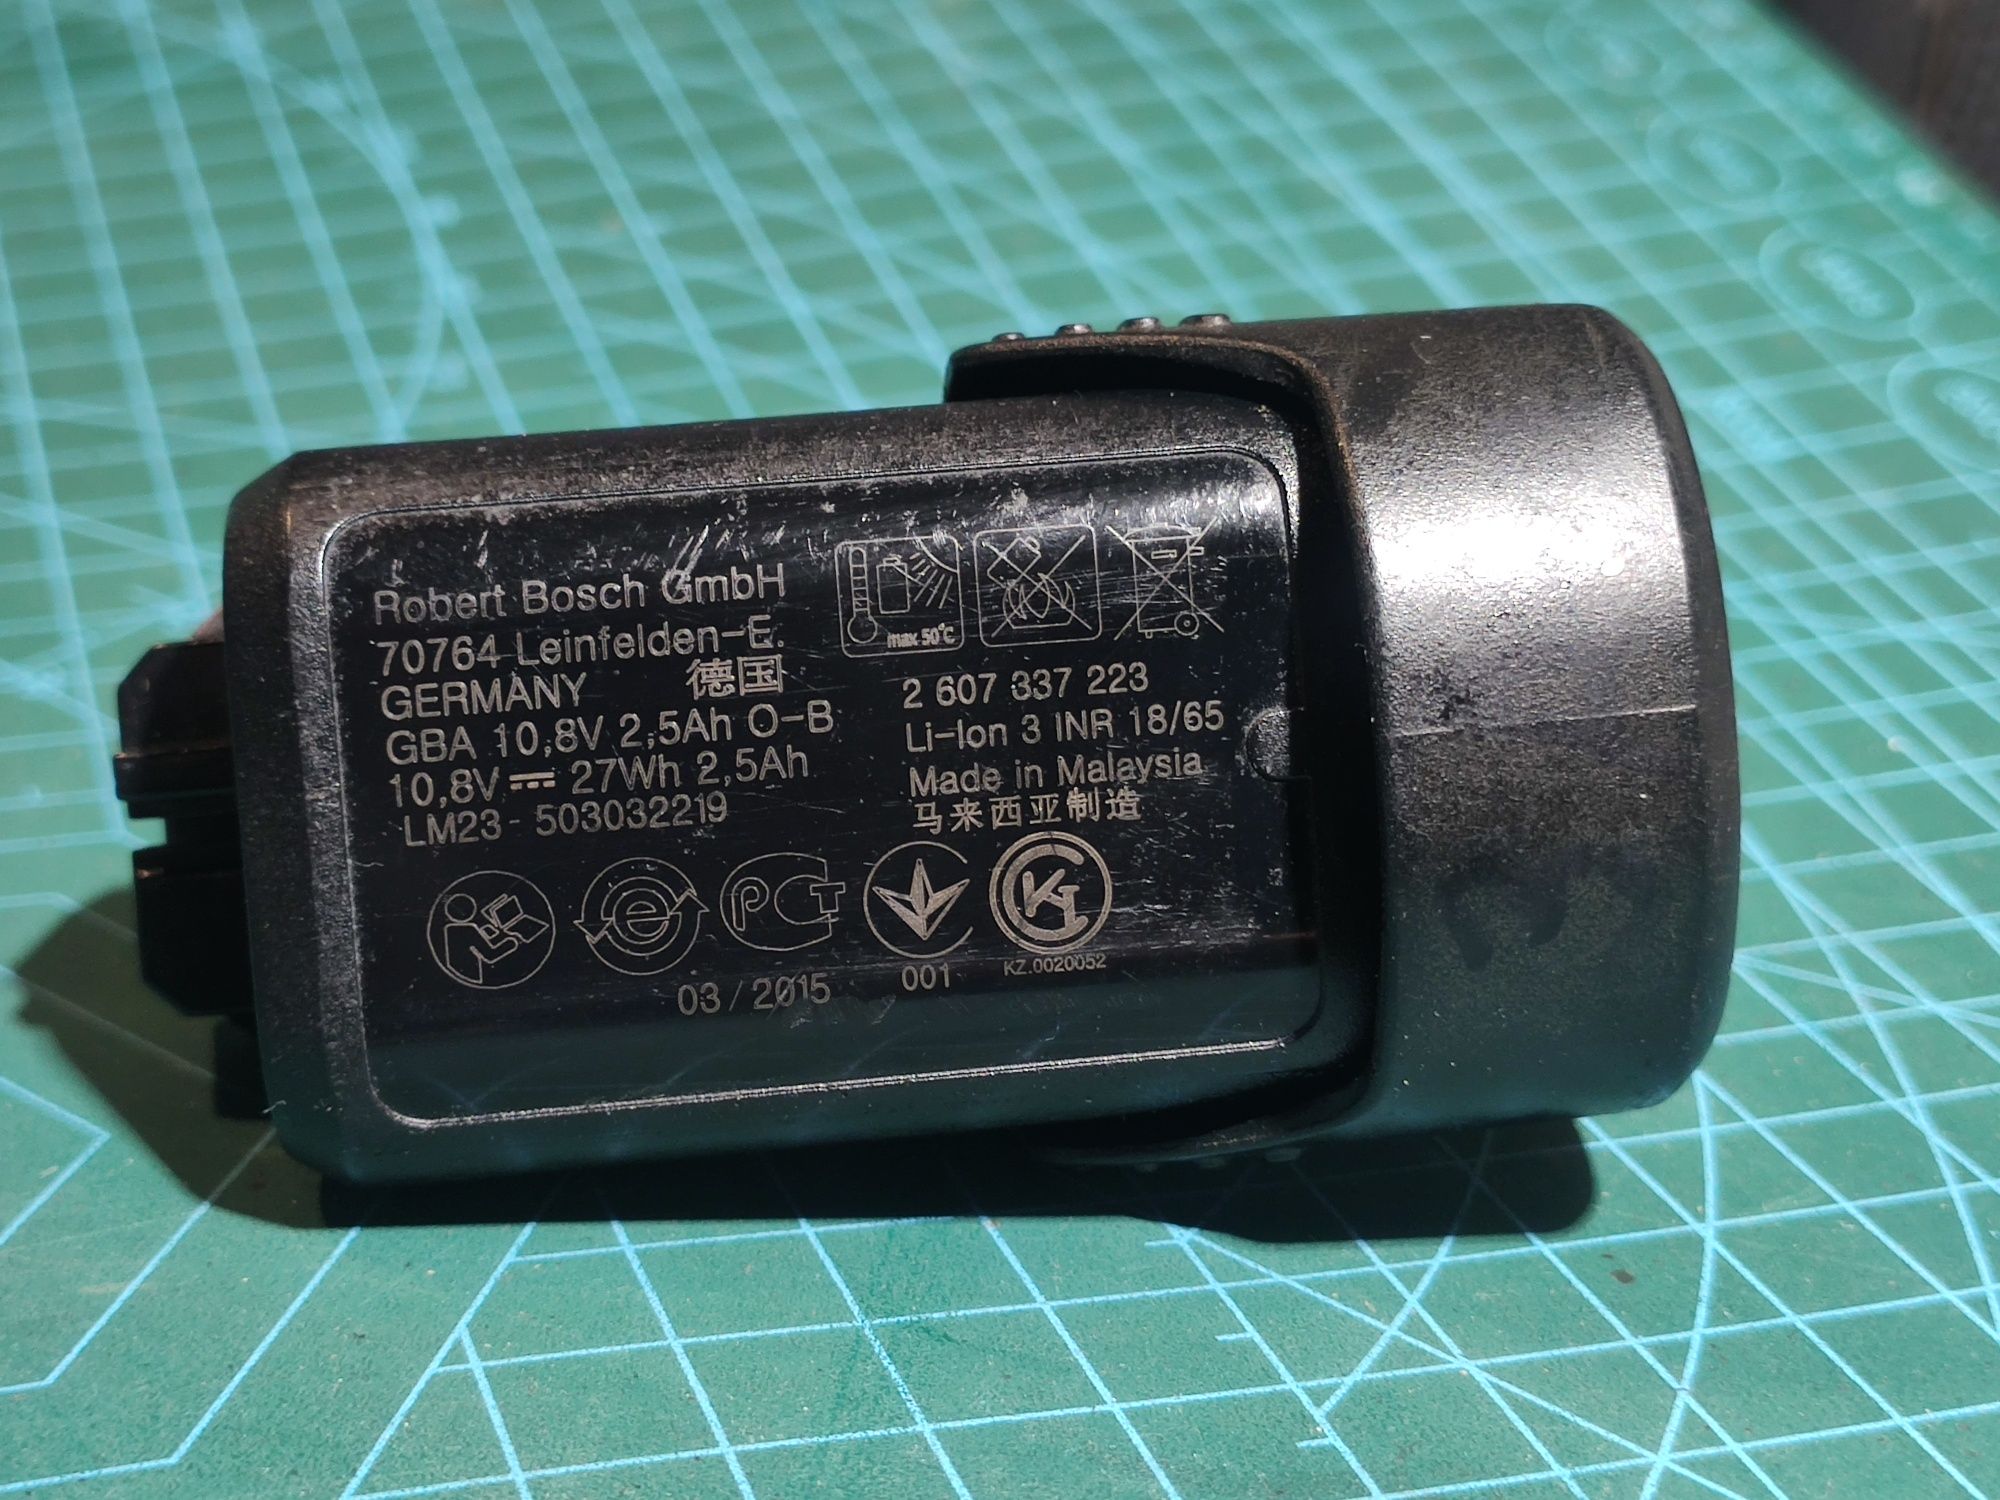 Bosch 10.8V li-ion 3Am